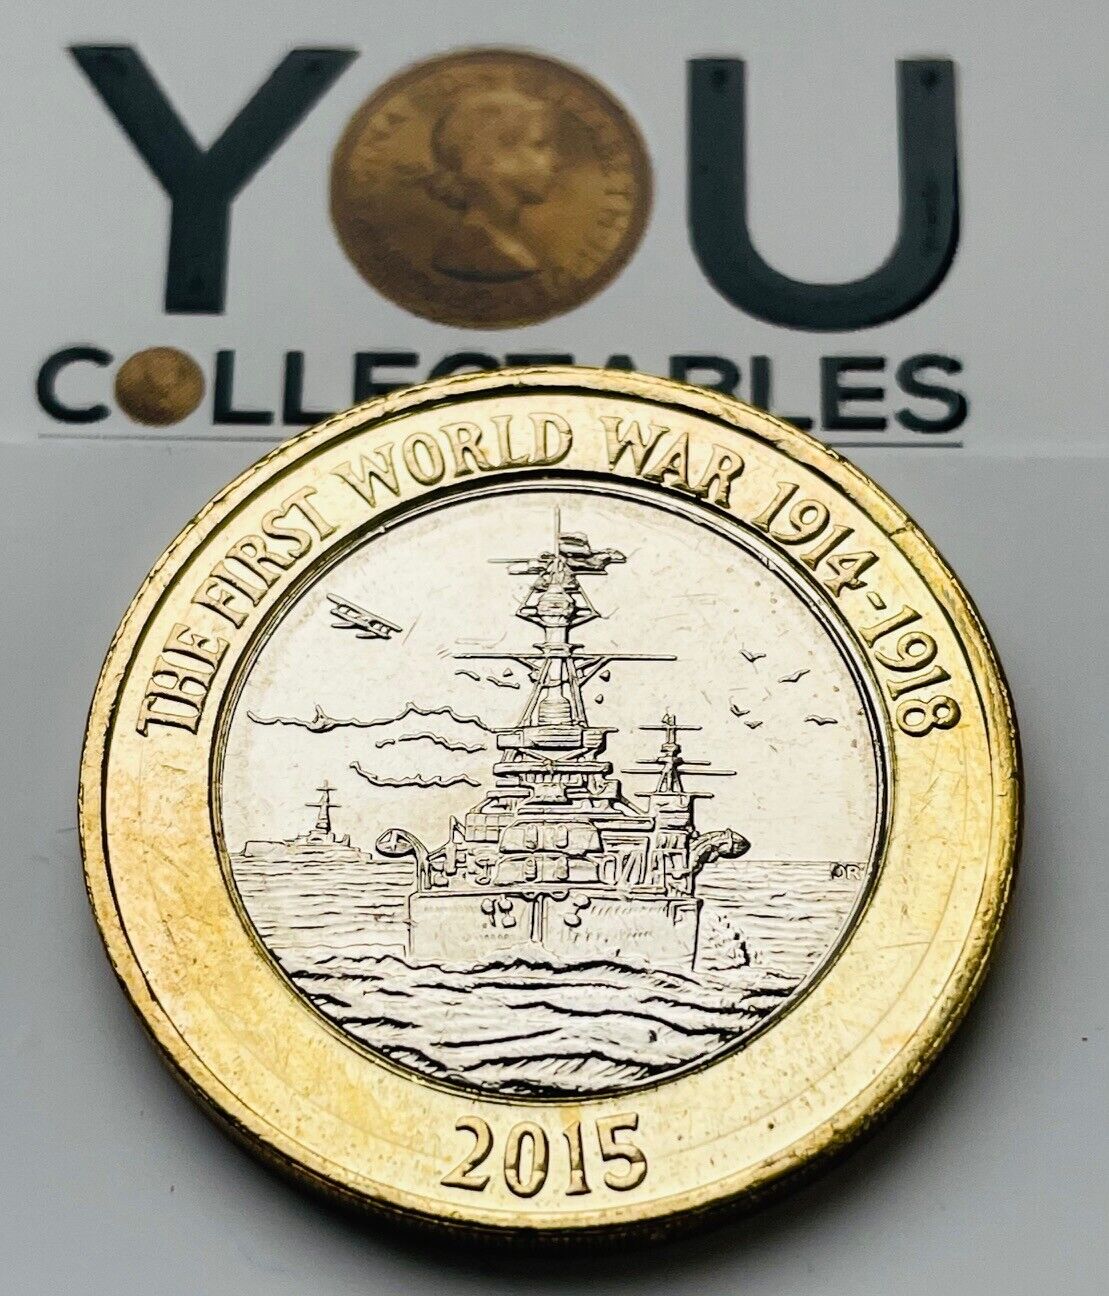 two pound coin 2015 first world war